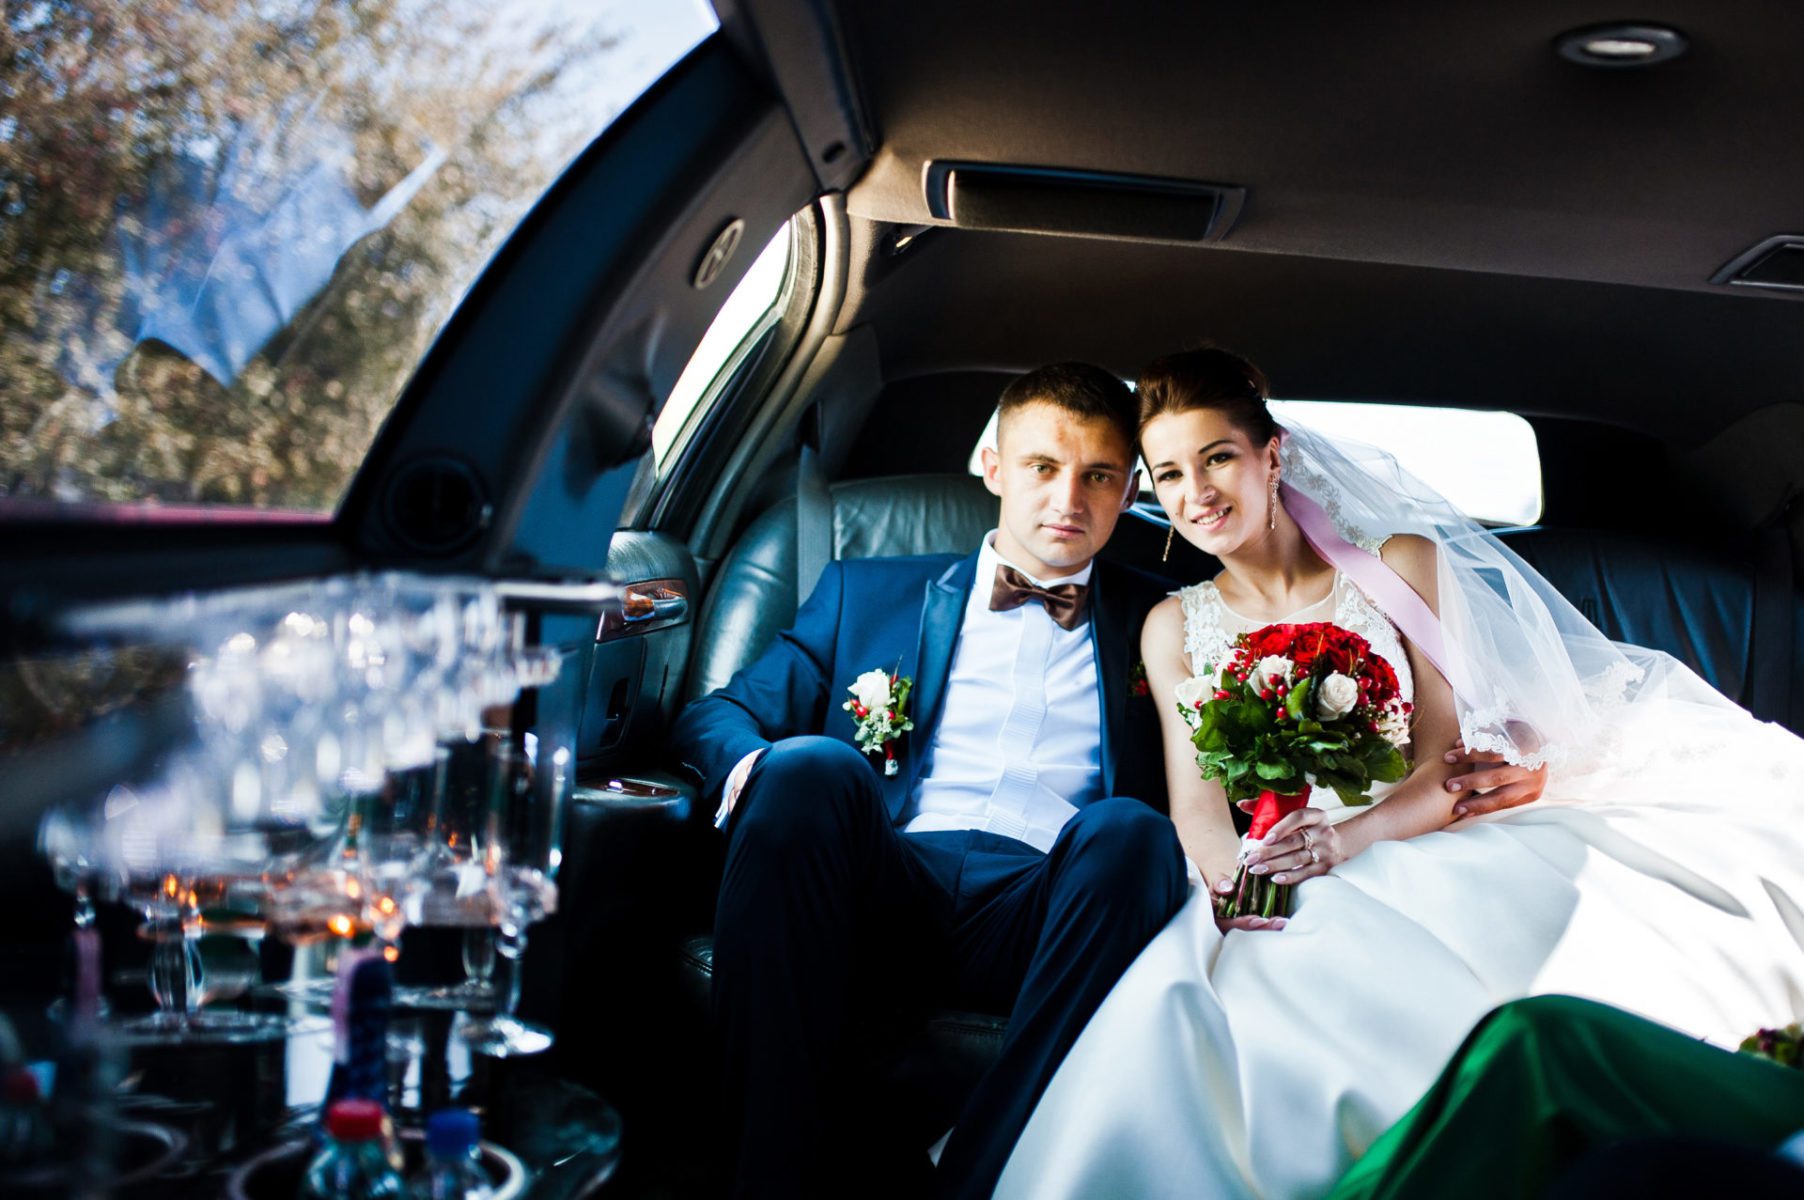 wedding couple indoor the limousine